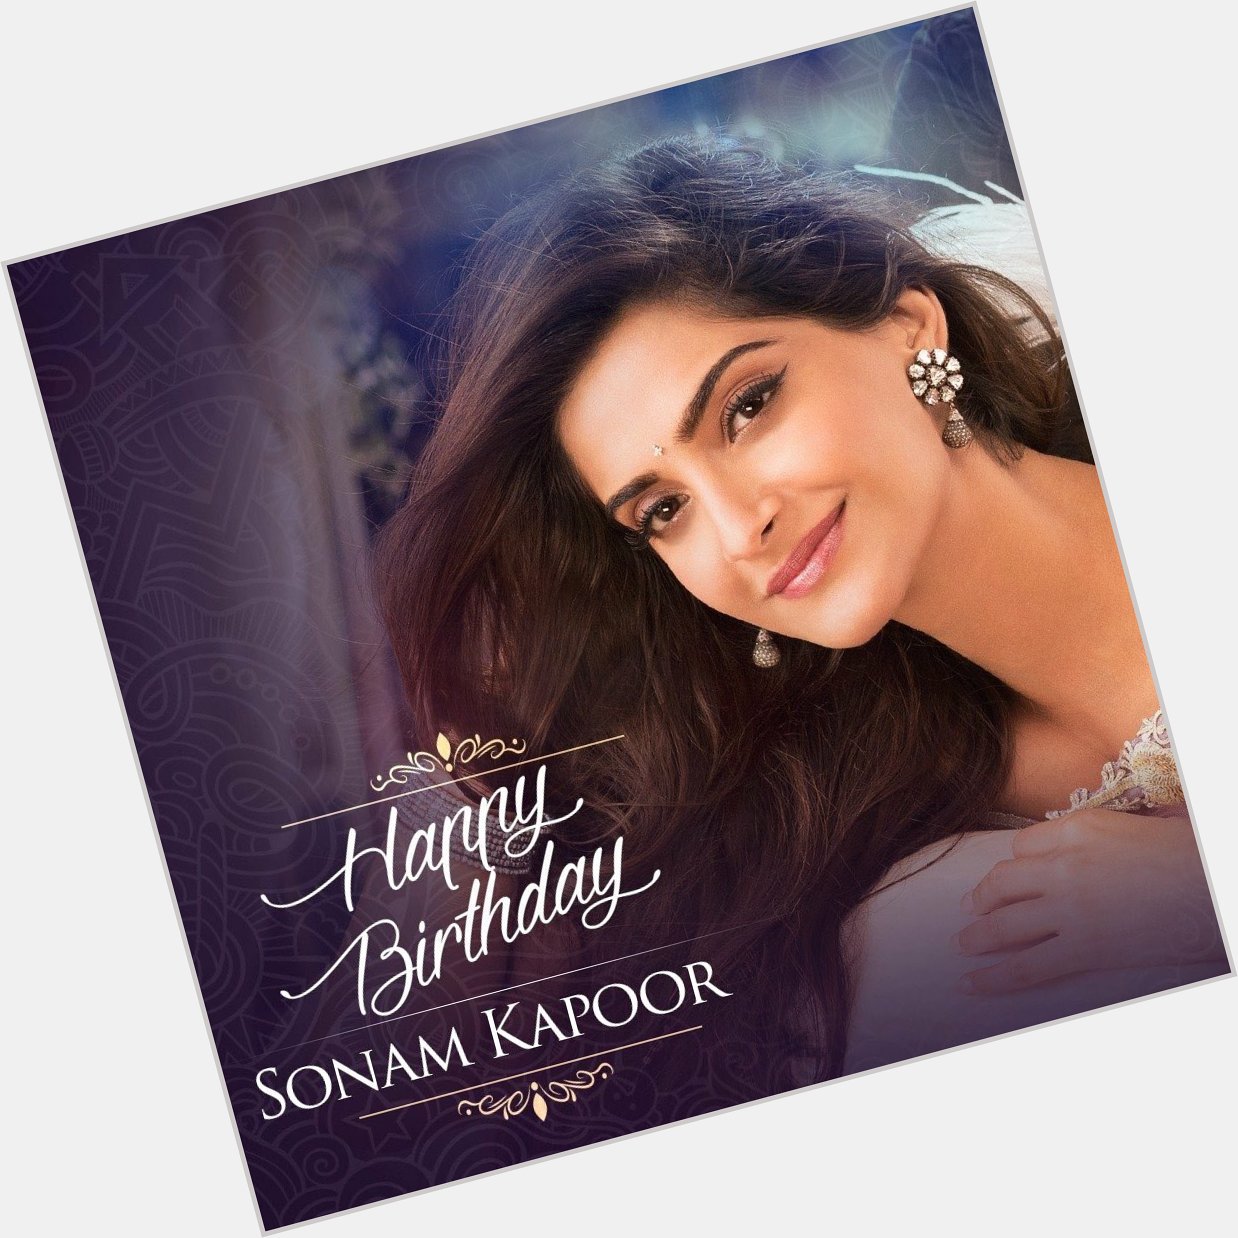 Wishing the gorgeous Sonam Kapoor A Very Happy Birthday   